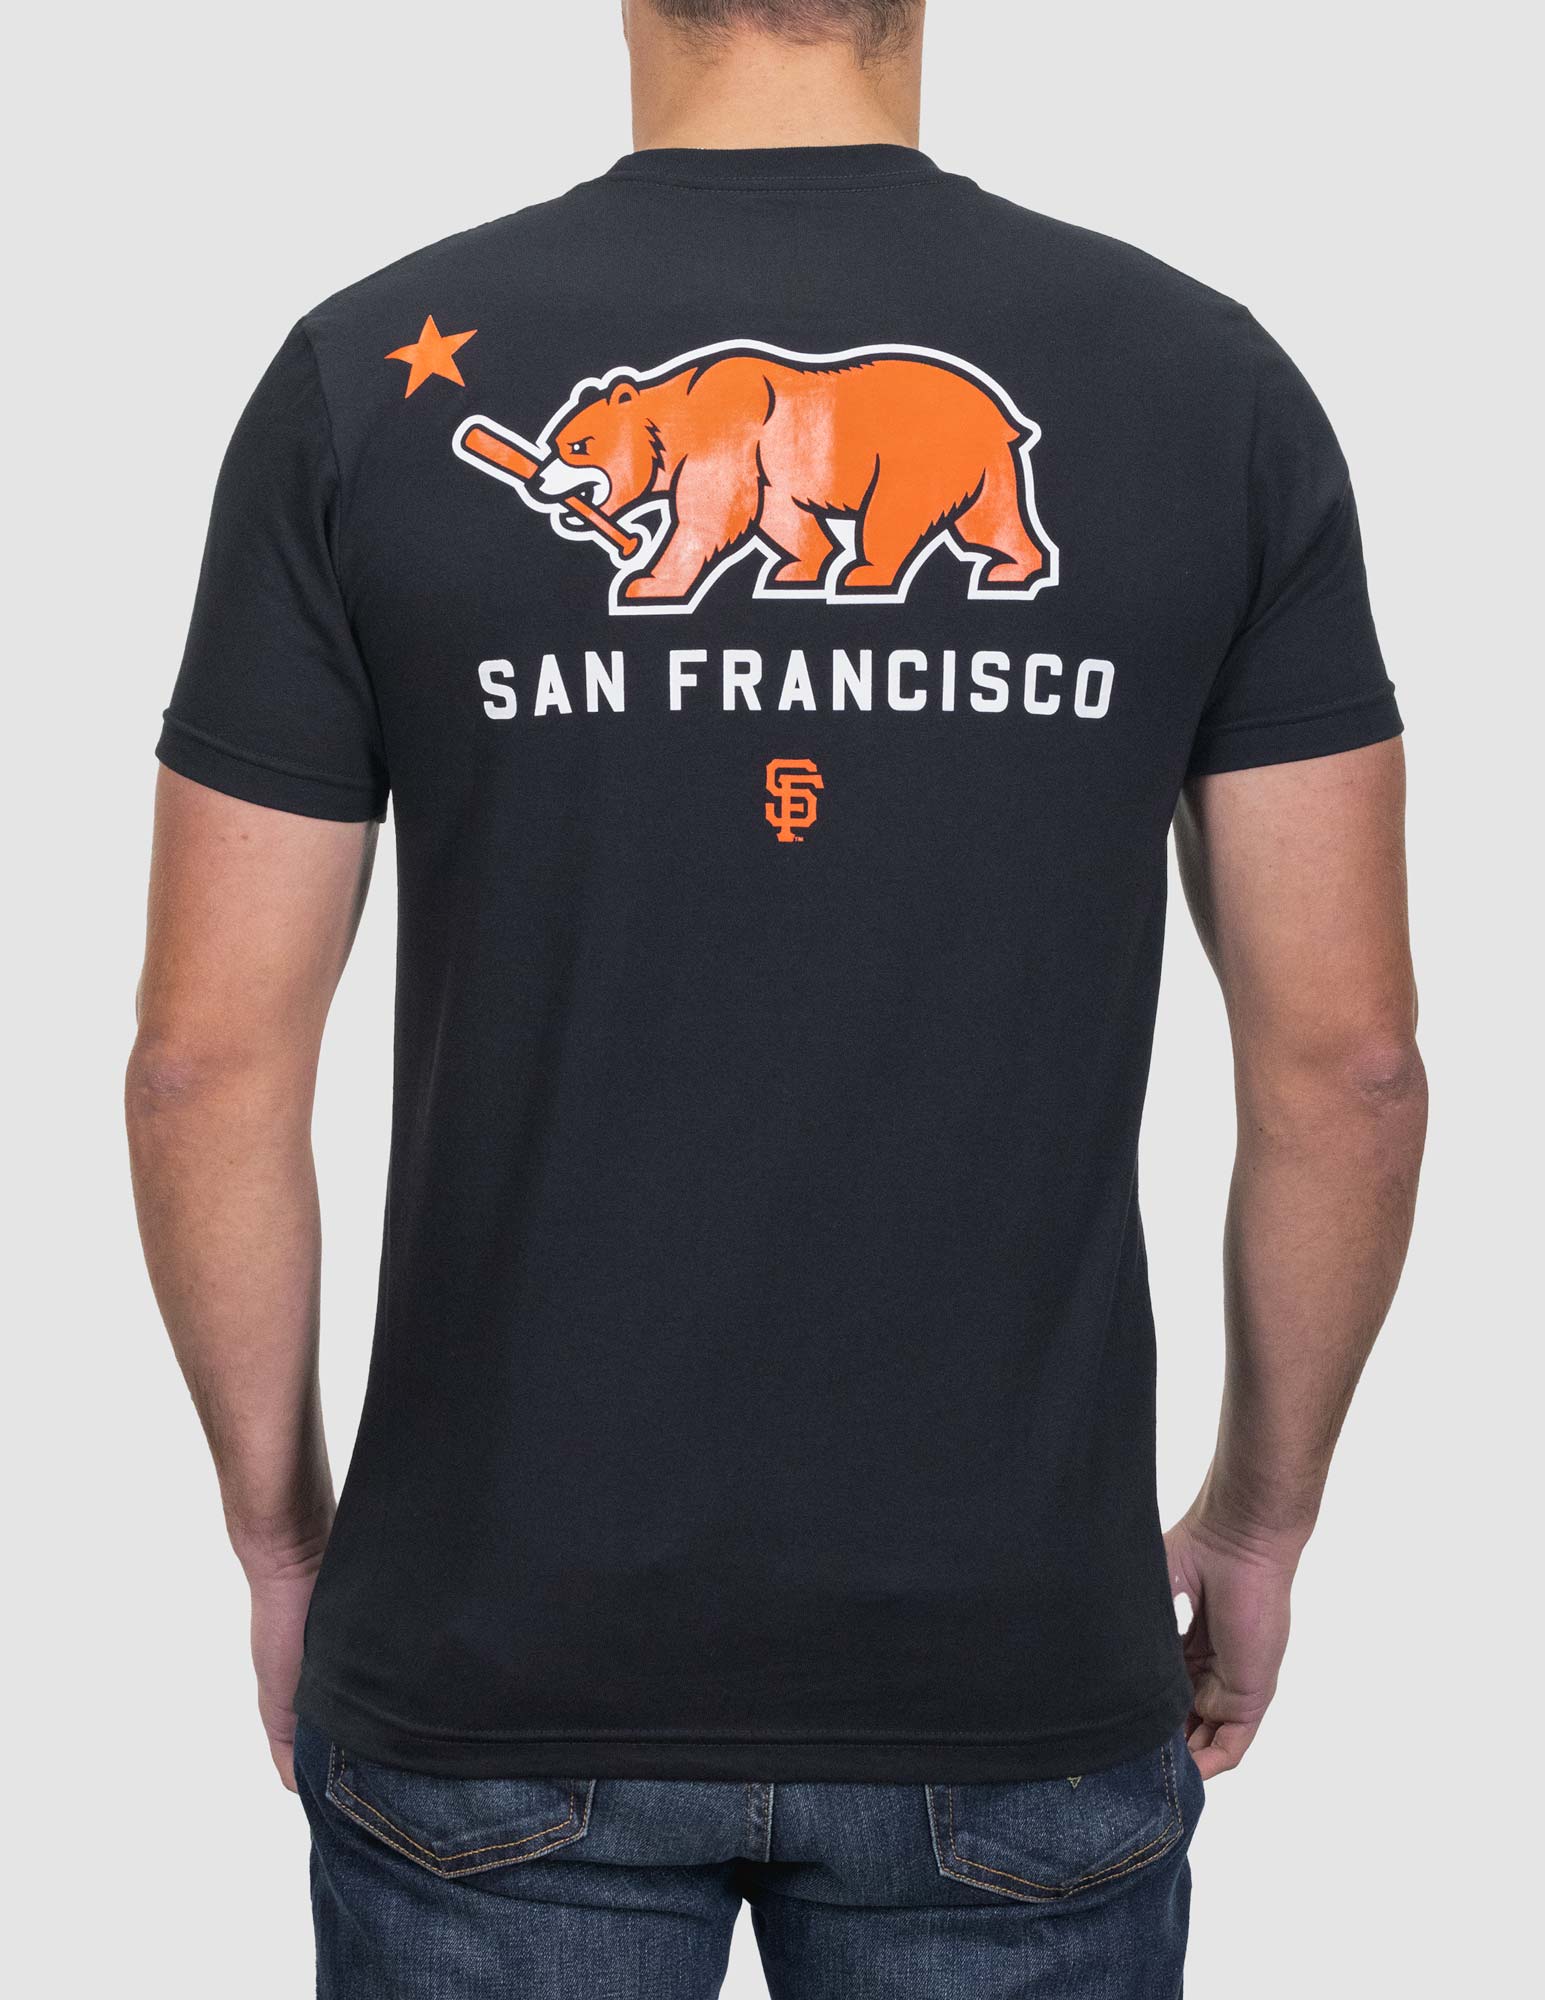 San Francisco Giants Pro Standard Team T-Shirt - Black